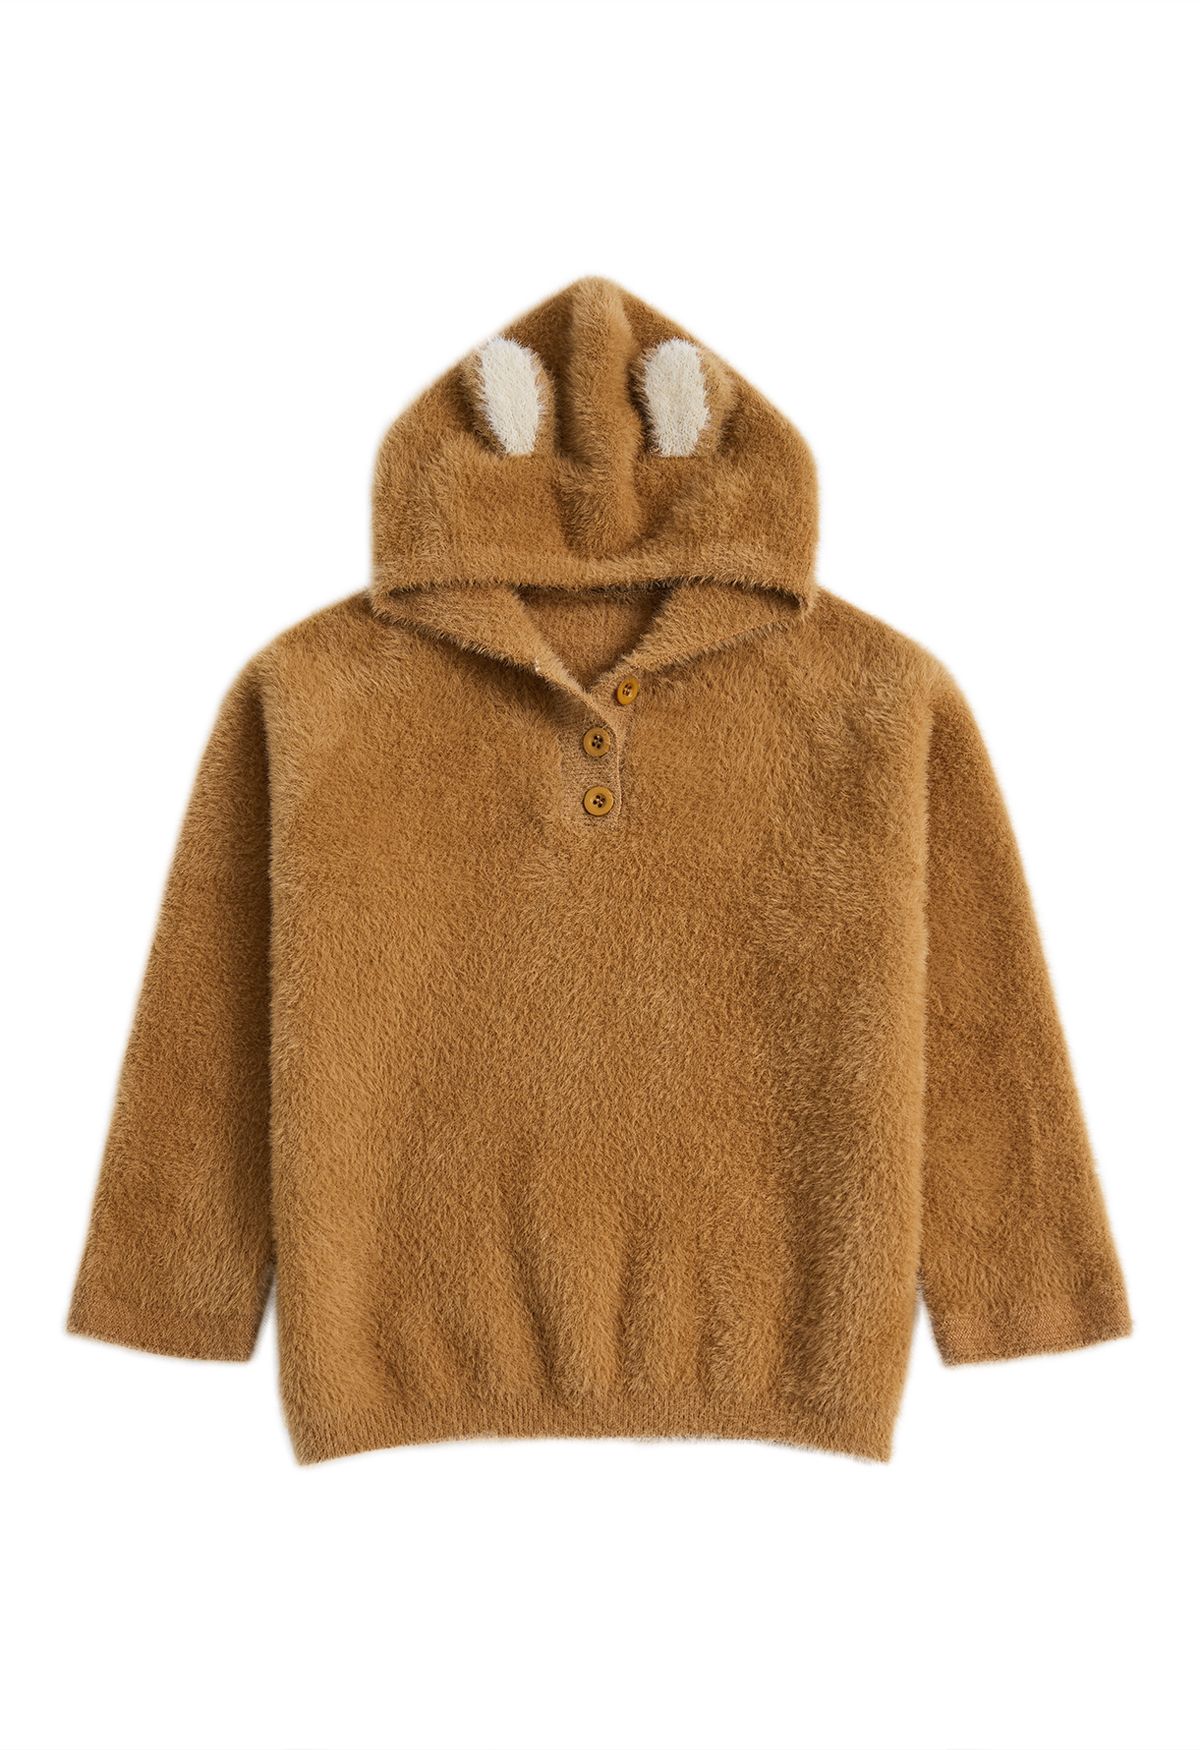 Lindo suéter con capucha de punto borroso de oso en tostado para niños